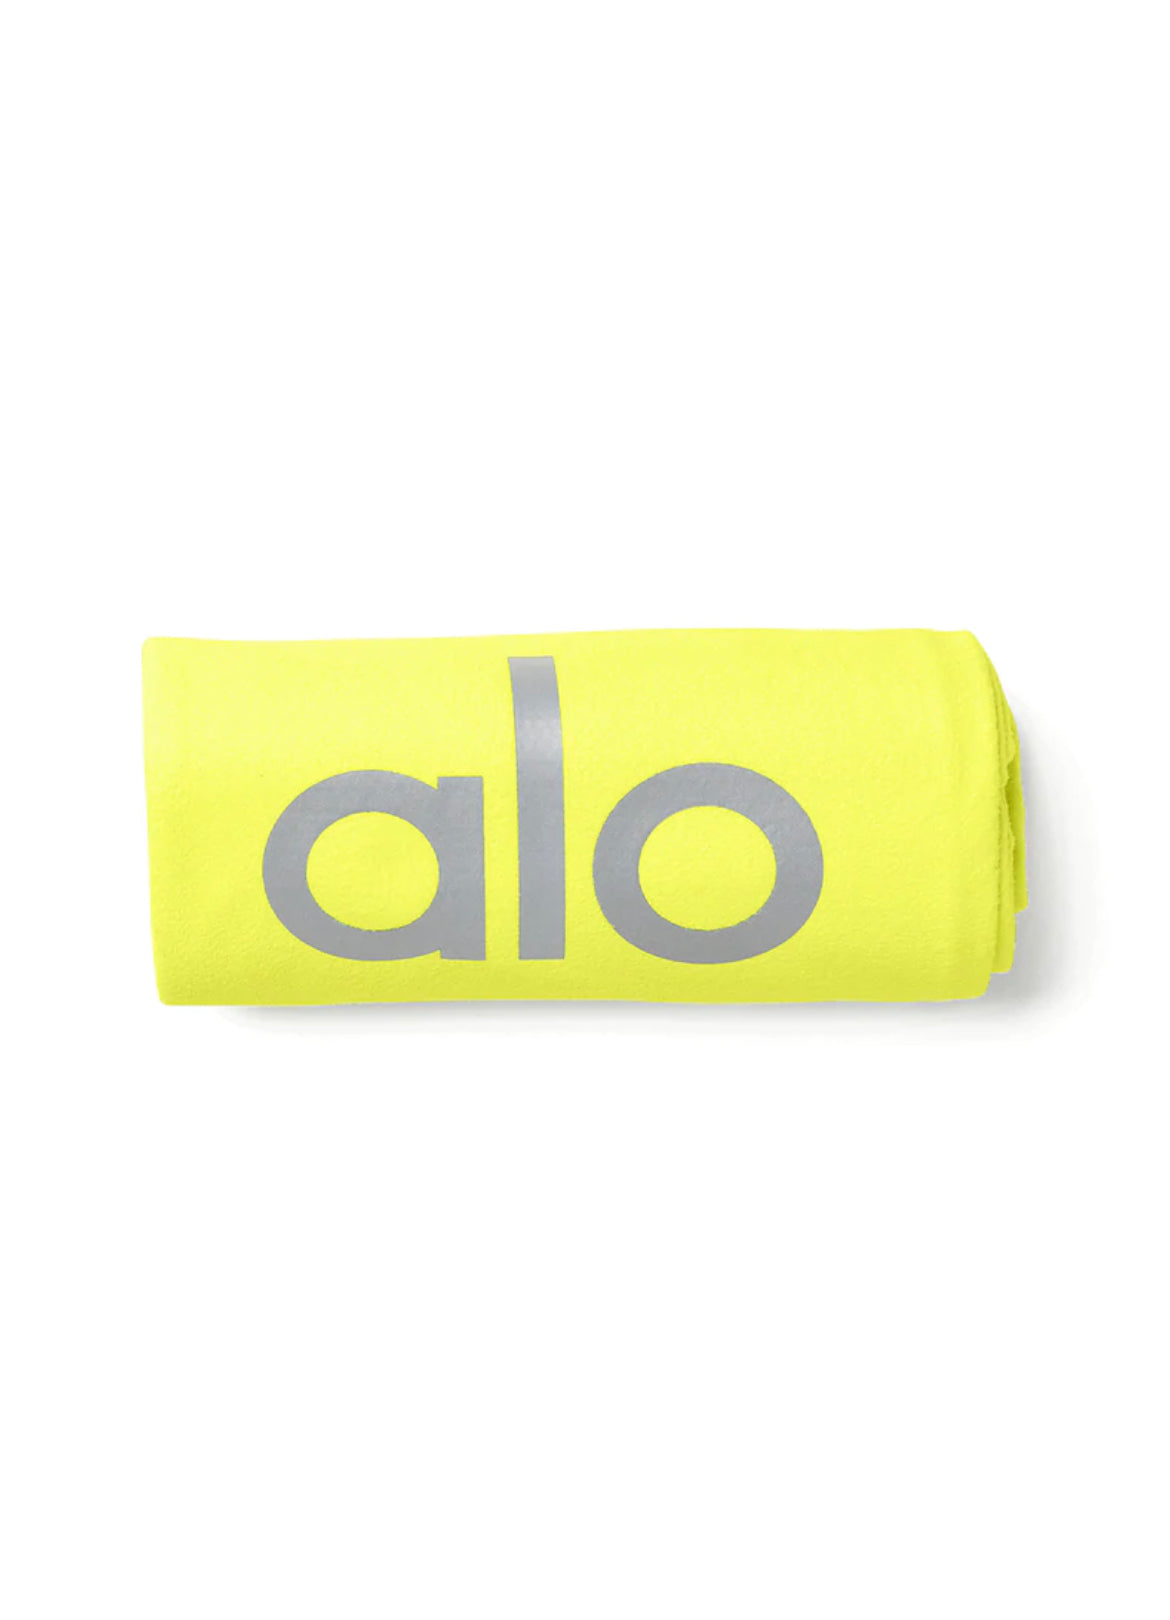 ALO A0029U GROUNDED NO-SLIP MAT TOWEL- HIGHLIGHTER